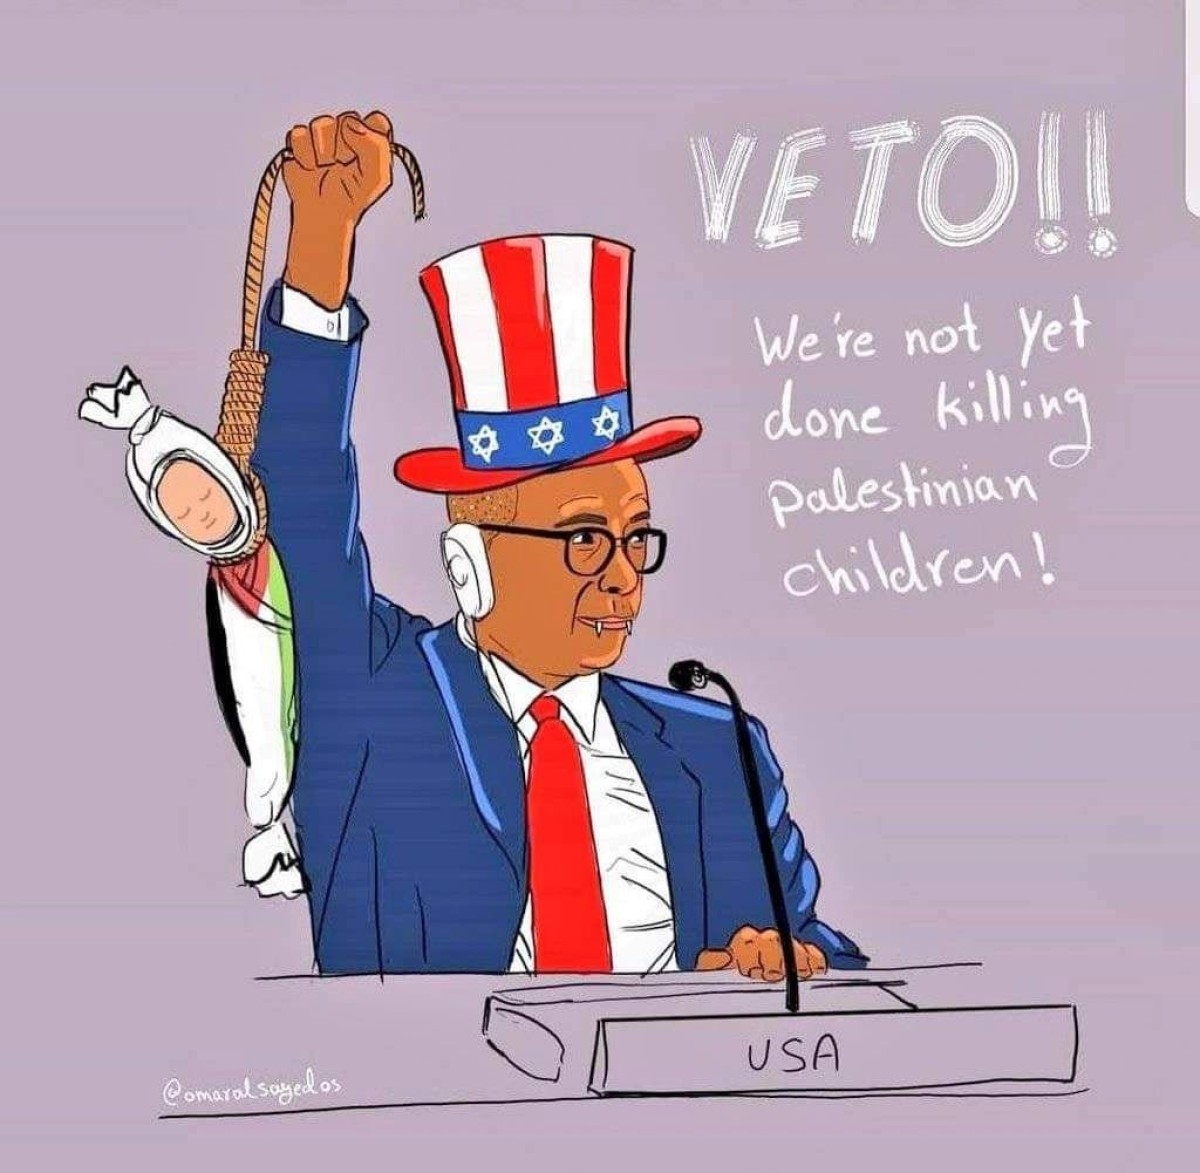 VETO!! We're not yet done killing Palestinian children!